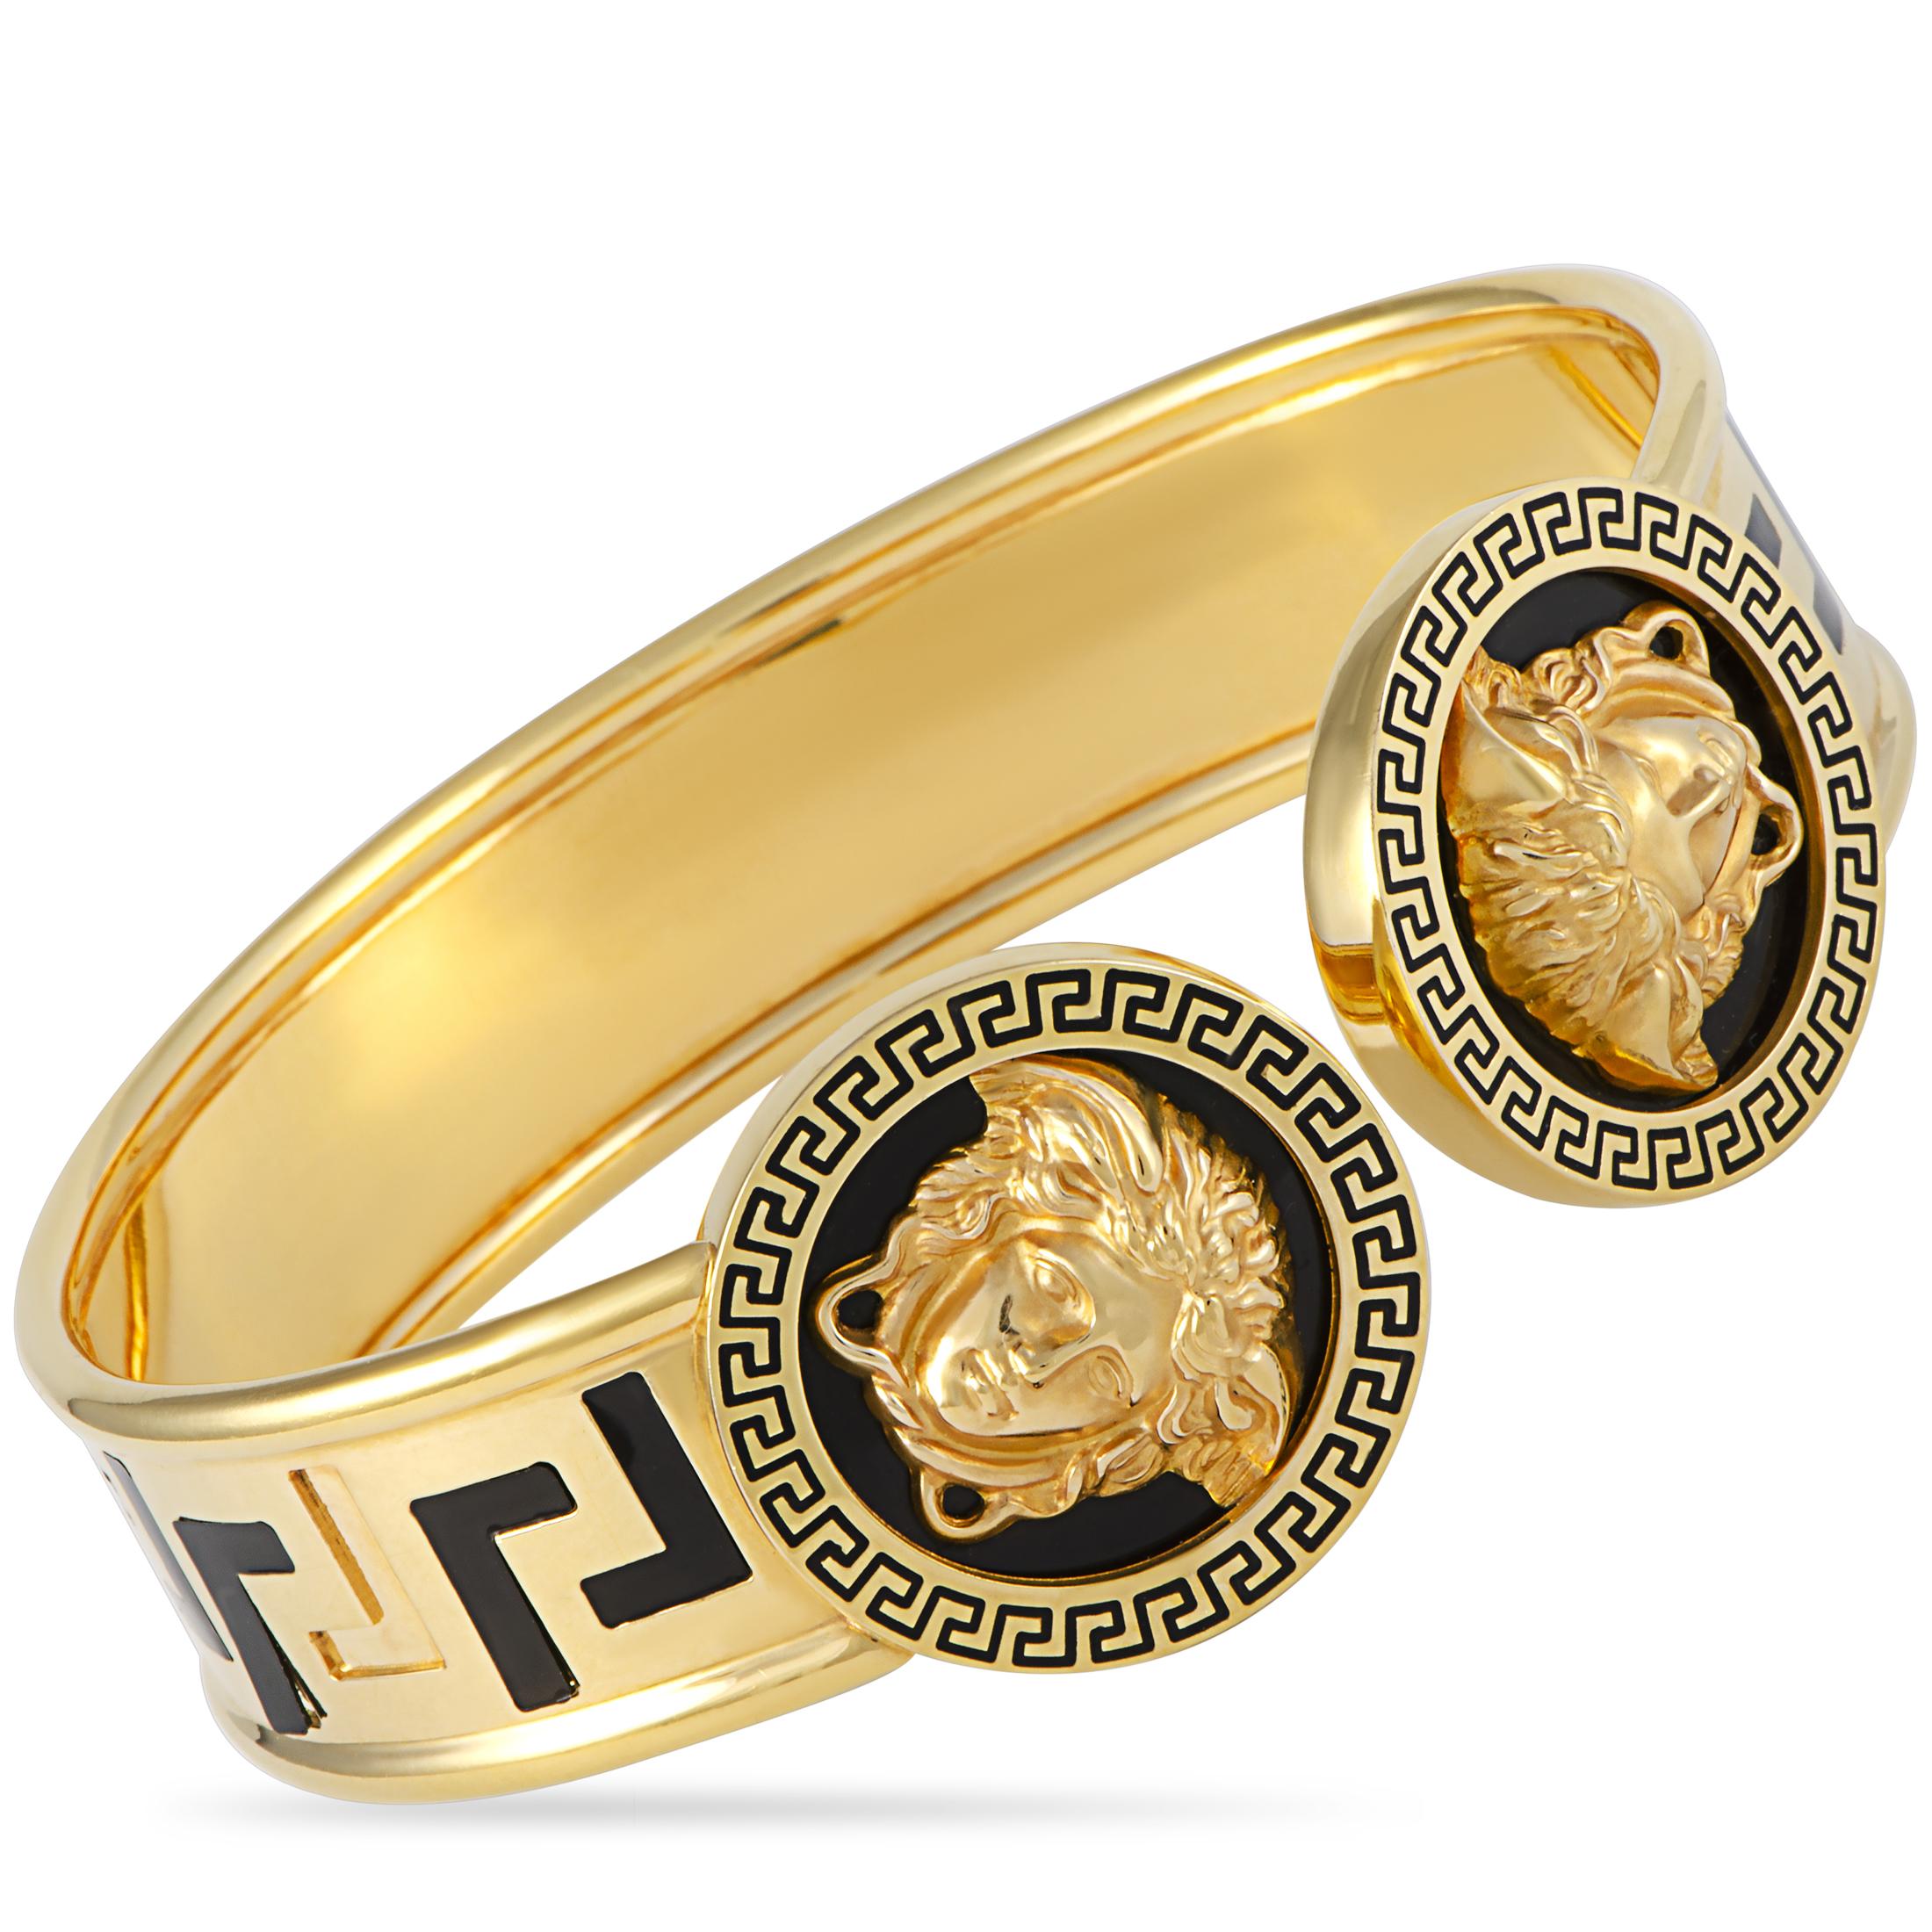 Gianni Versace Medusa 18K Yellow Gold Enamel Bangle Bracelet 